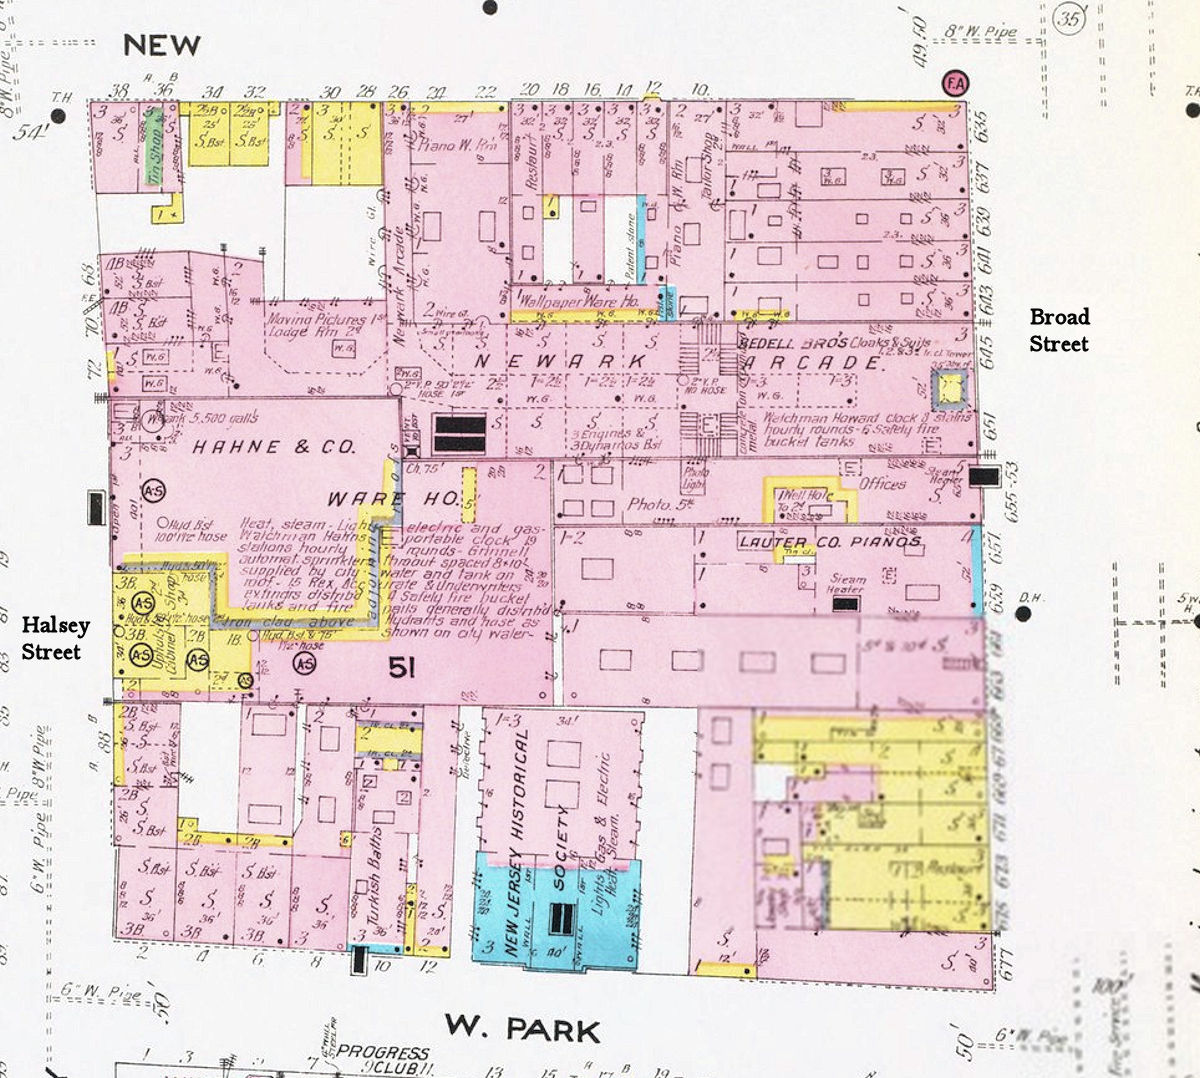 1908 Map
Warehouse
74-86 Halsey Street
